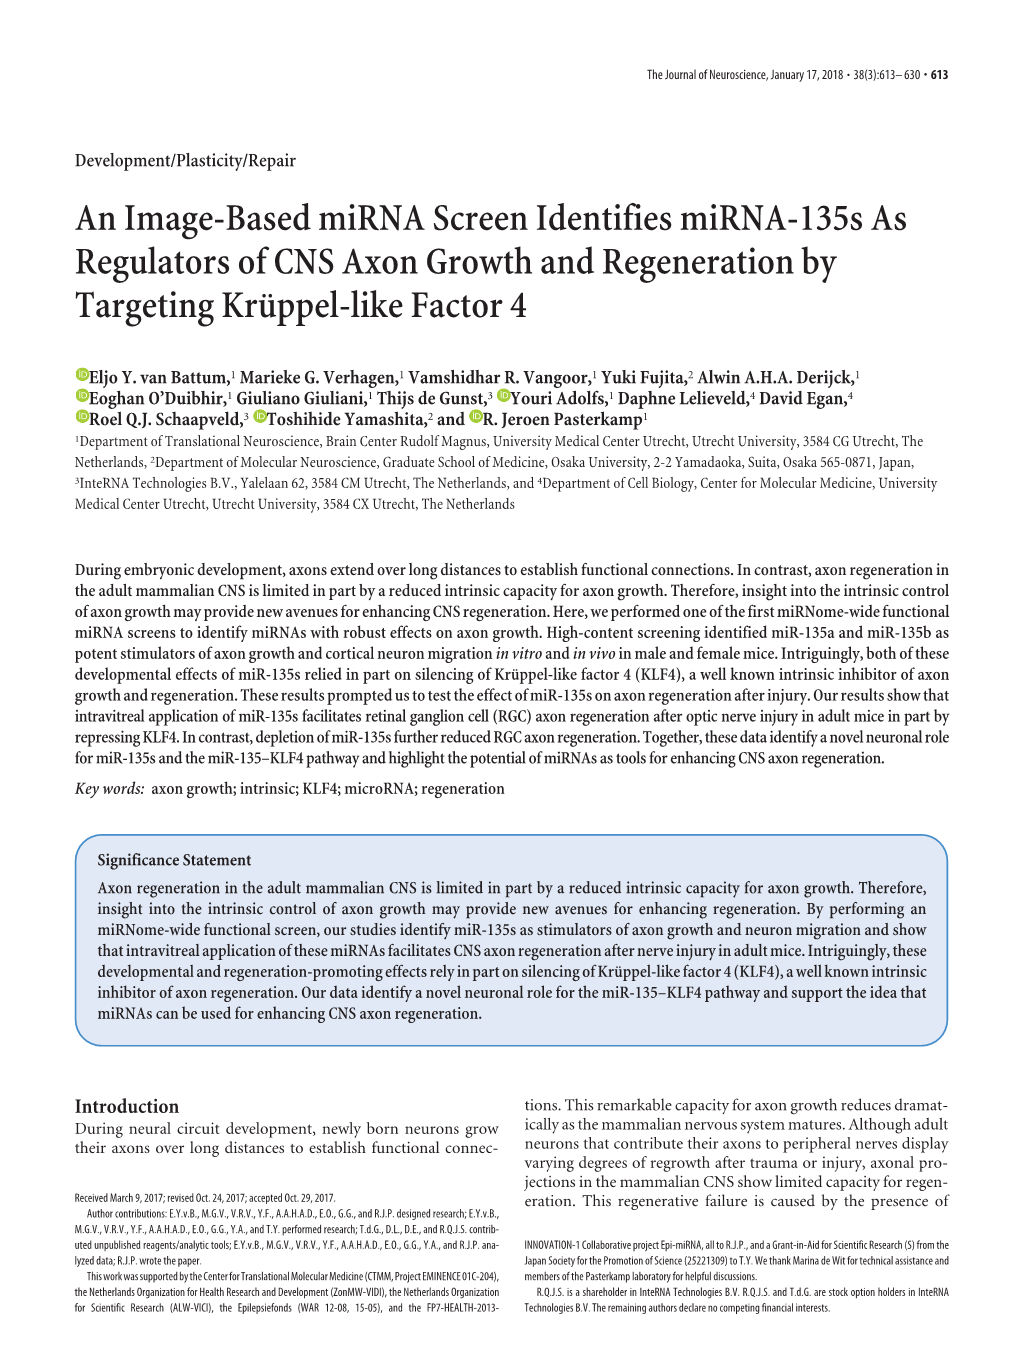 An Image-Based Mirna Screen Identifies Mirna-135S As Regulators of CNS Axon Growth and Regeneration by Targeting Kru¨Ppel-Like Factor 4